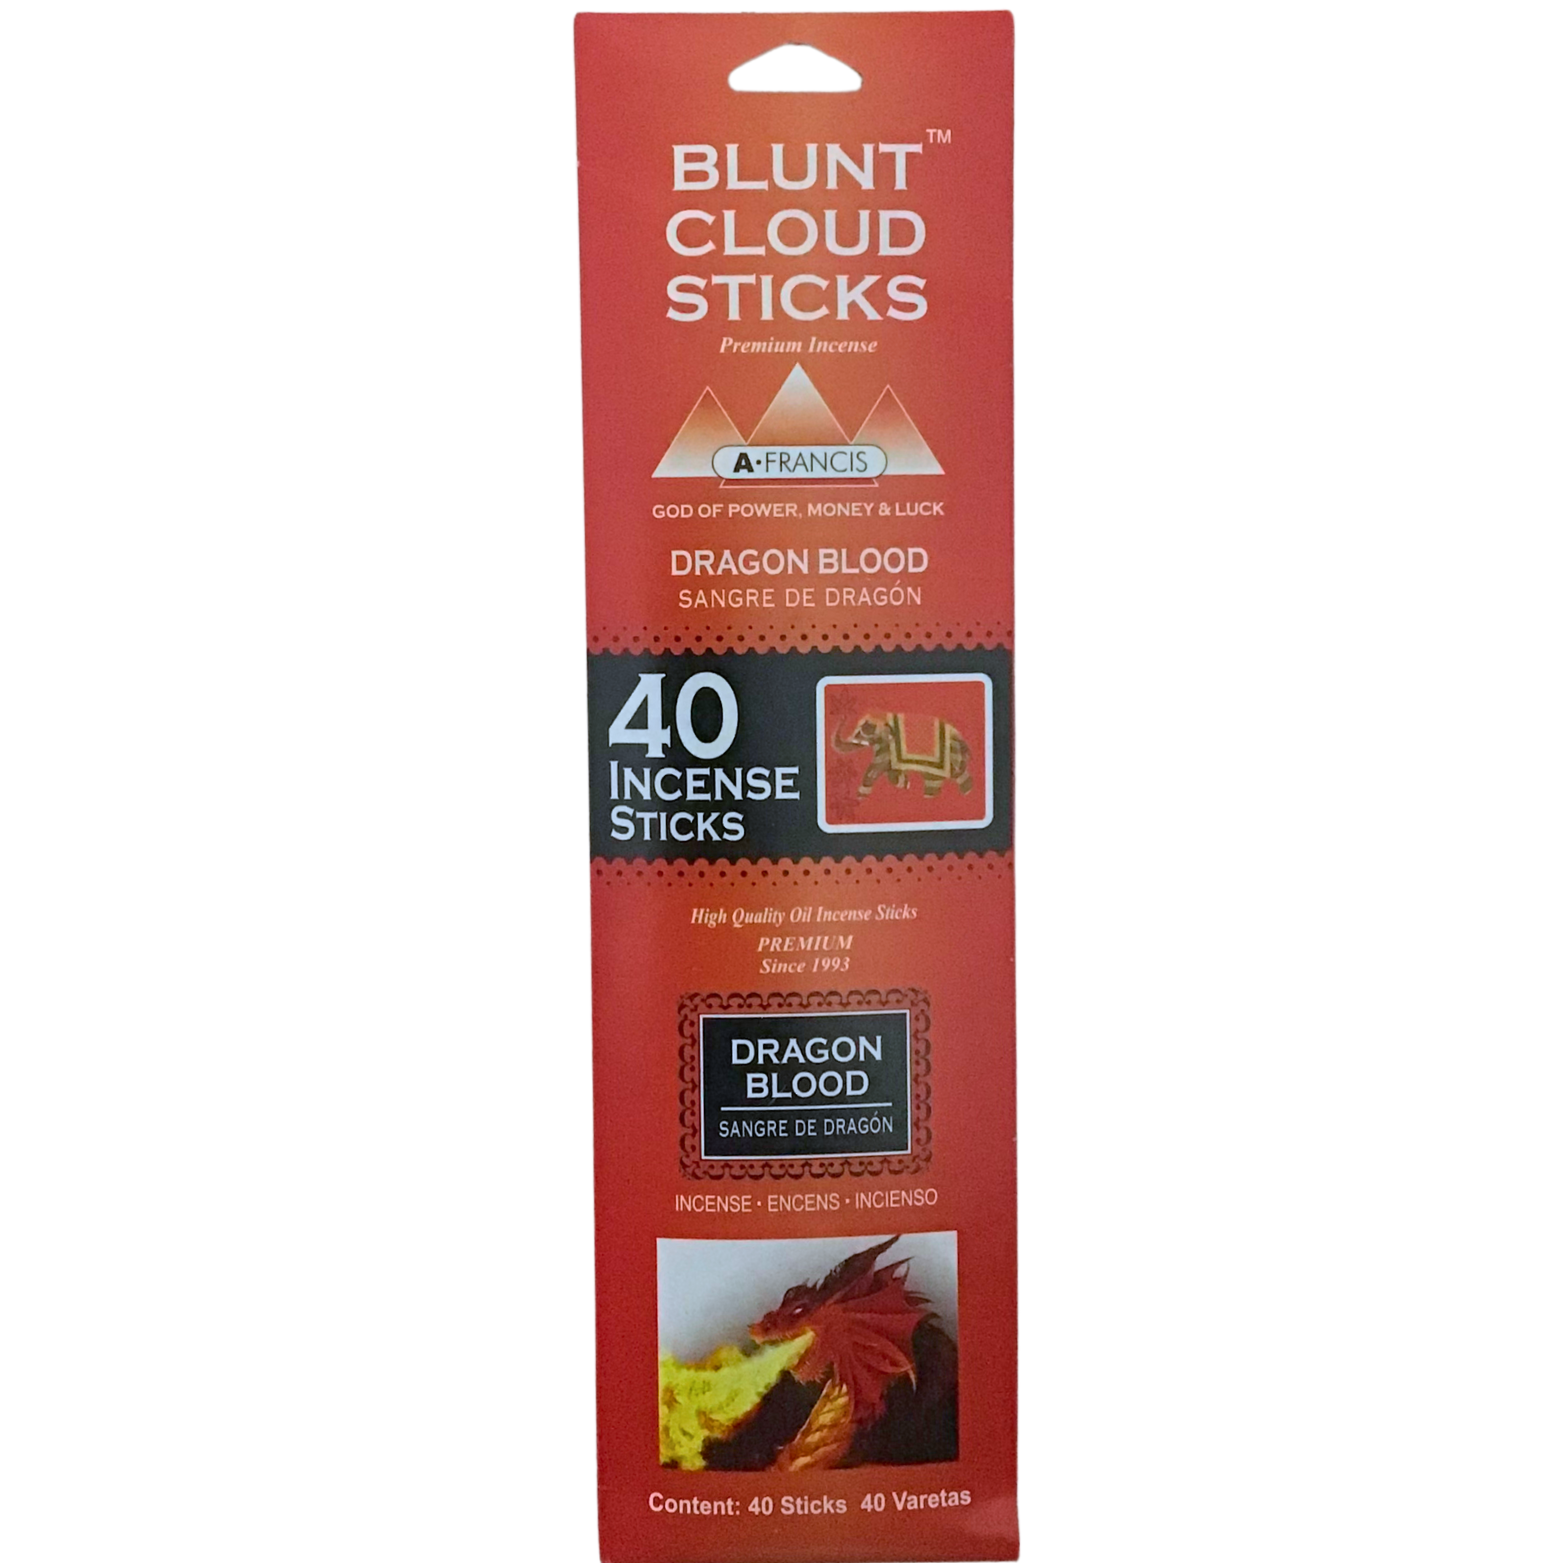 Blunt Cloud 11 Inch Dragon Blood Incense Sticks